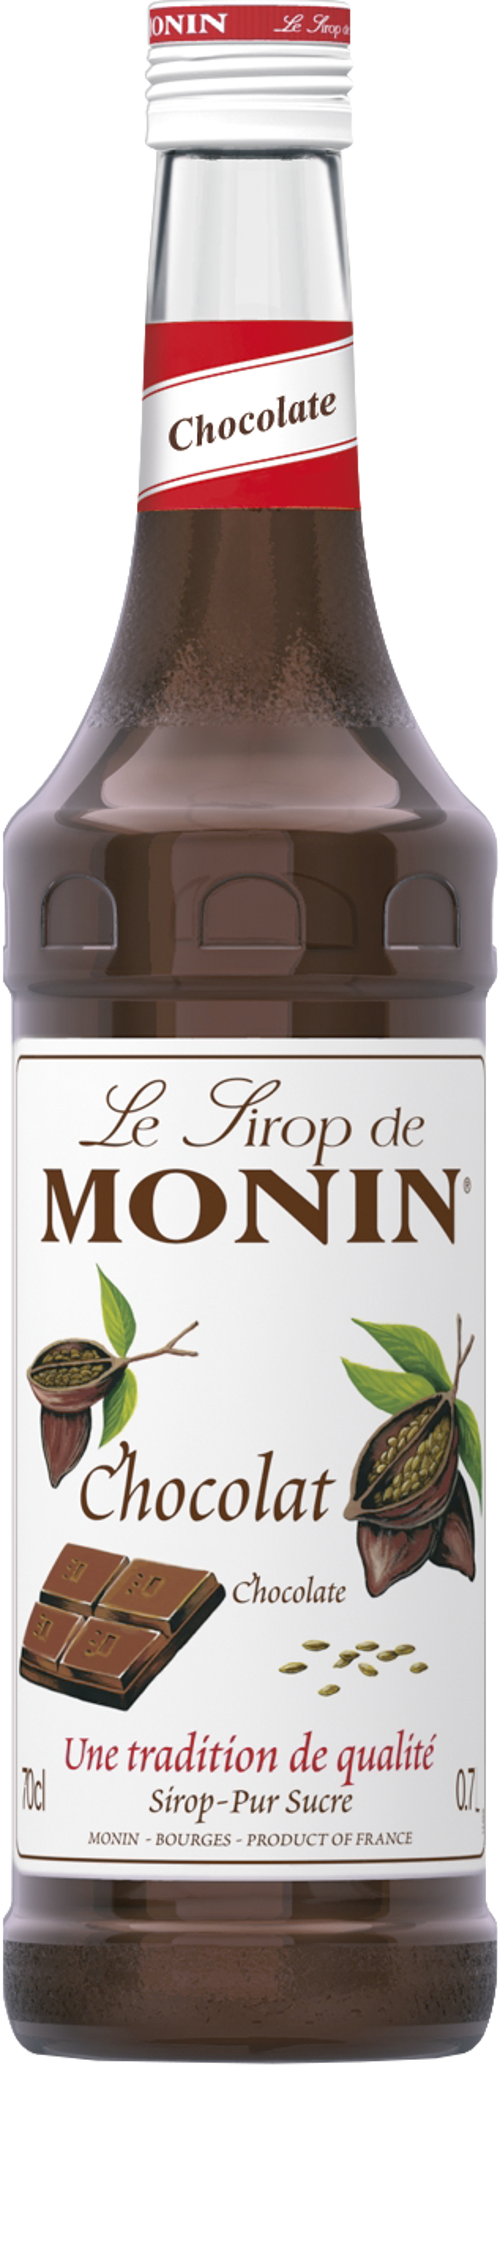 Le Sirop de MONIN Chocolate 0.7l